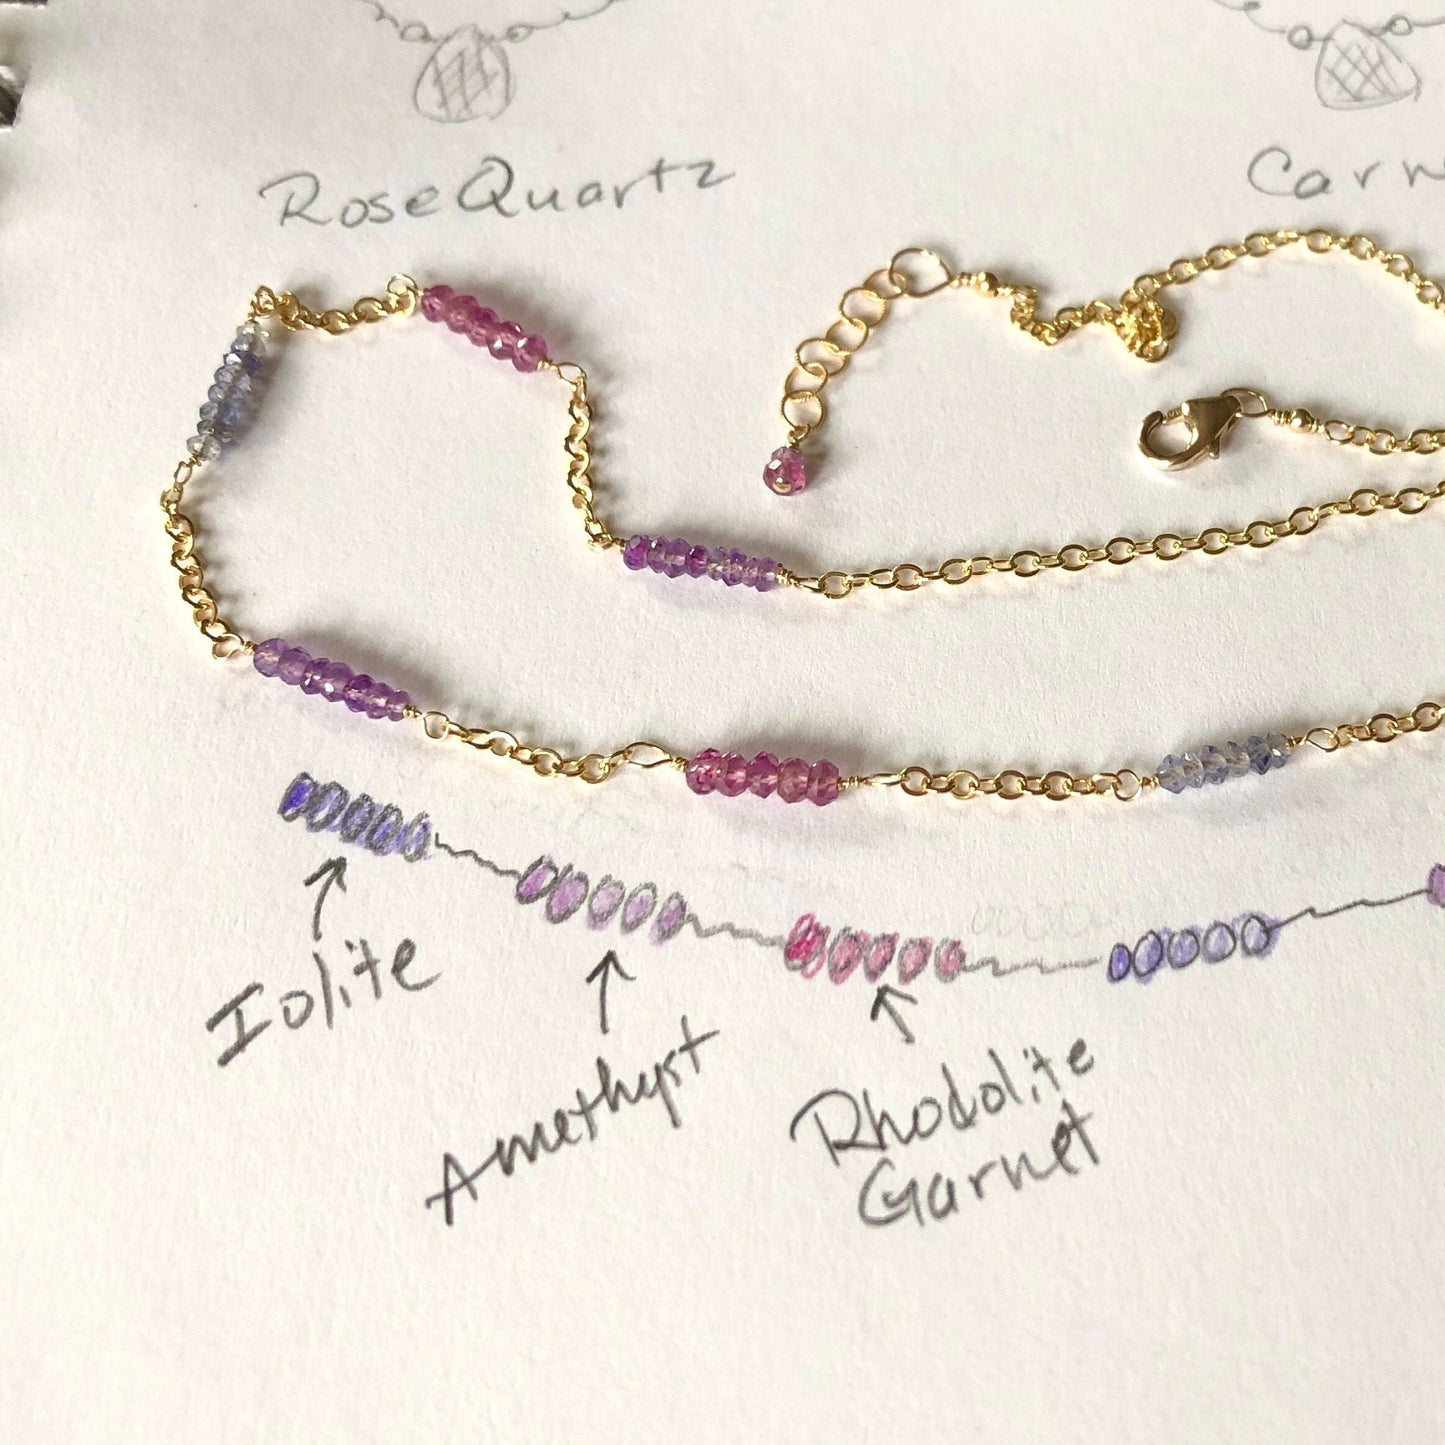 Gemstone Station Necklace, Iolite Necklace, Amethyst Necklace, Rhodolite Garnet Necklace